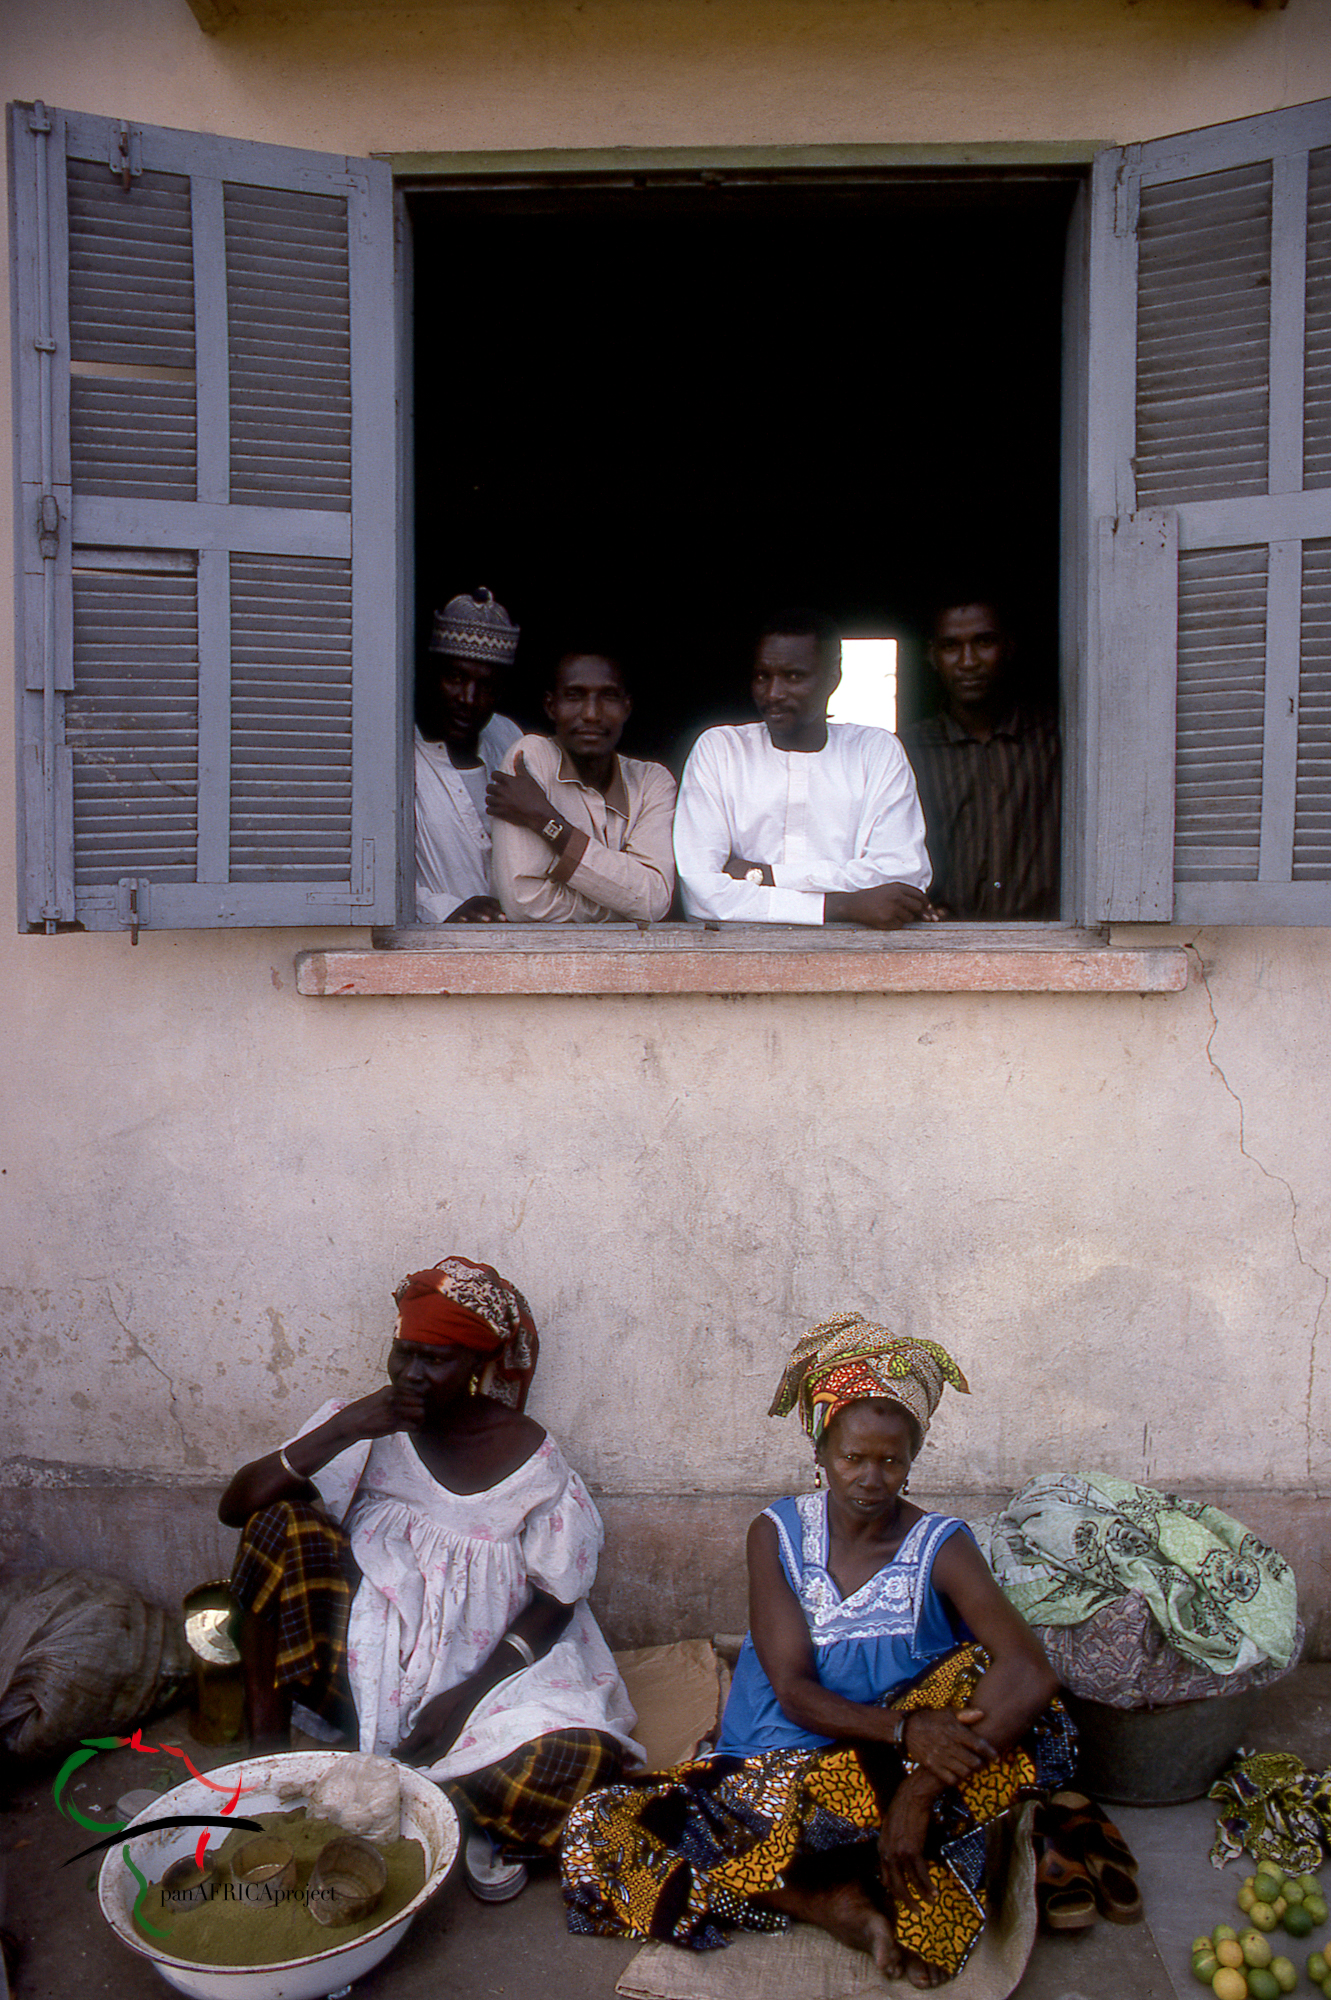 A family portrait in Dakar, Senegal